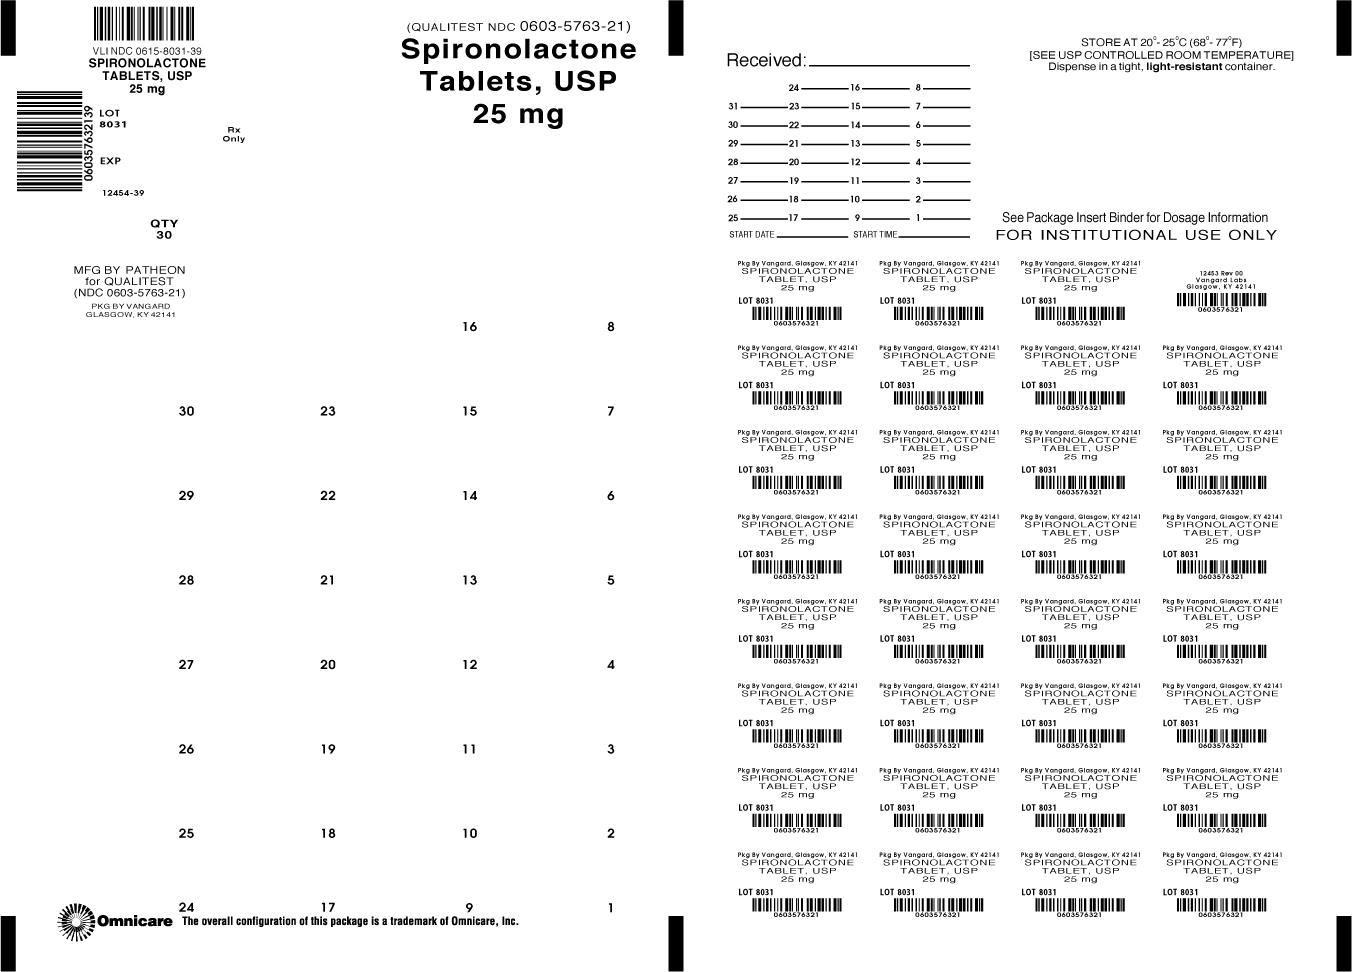 Spironolactone Tablets, USP 25mg bingo card label